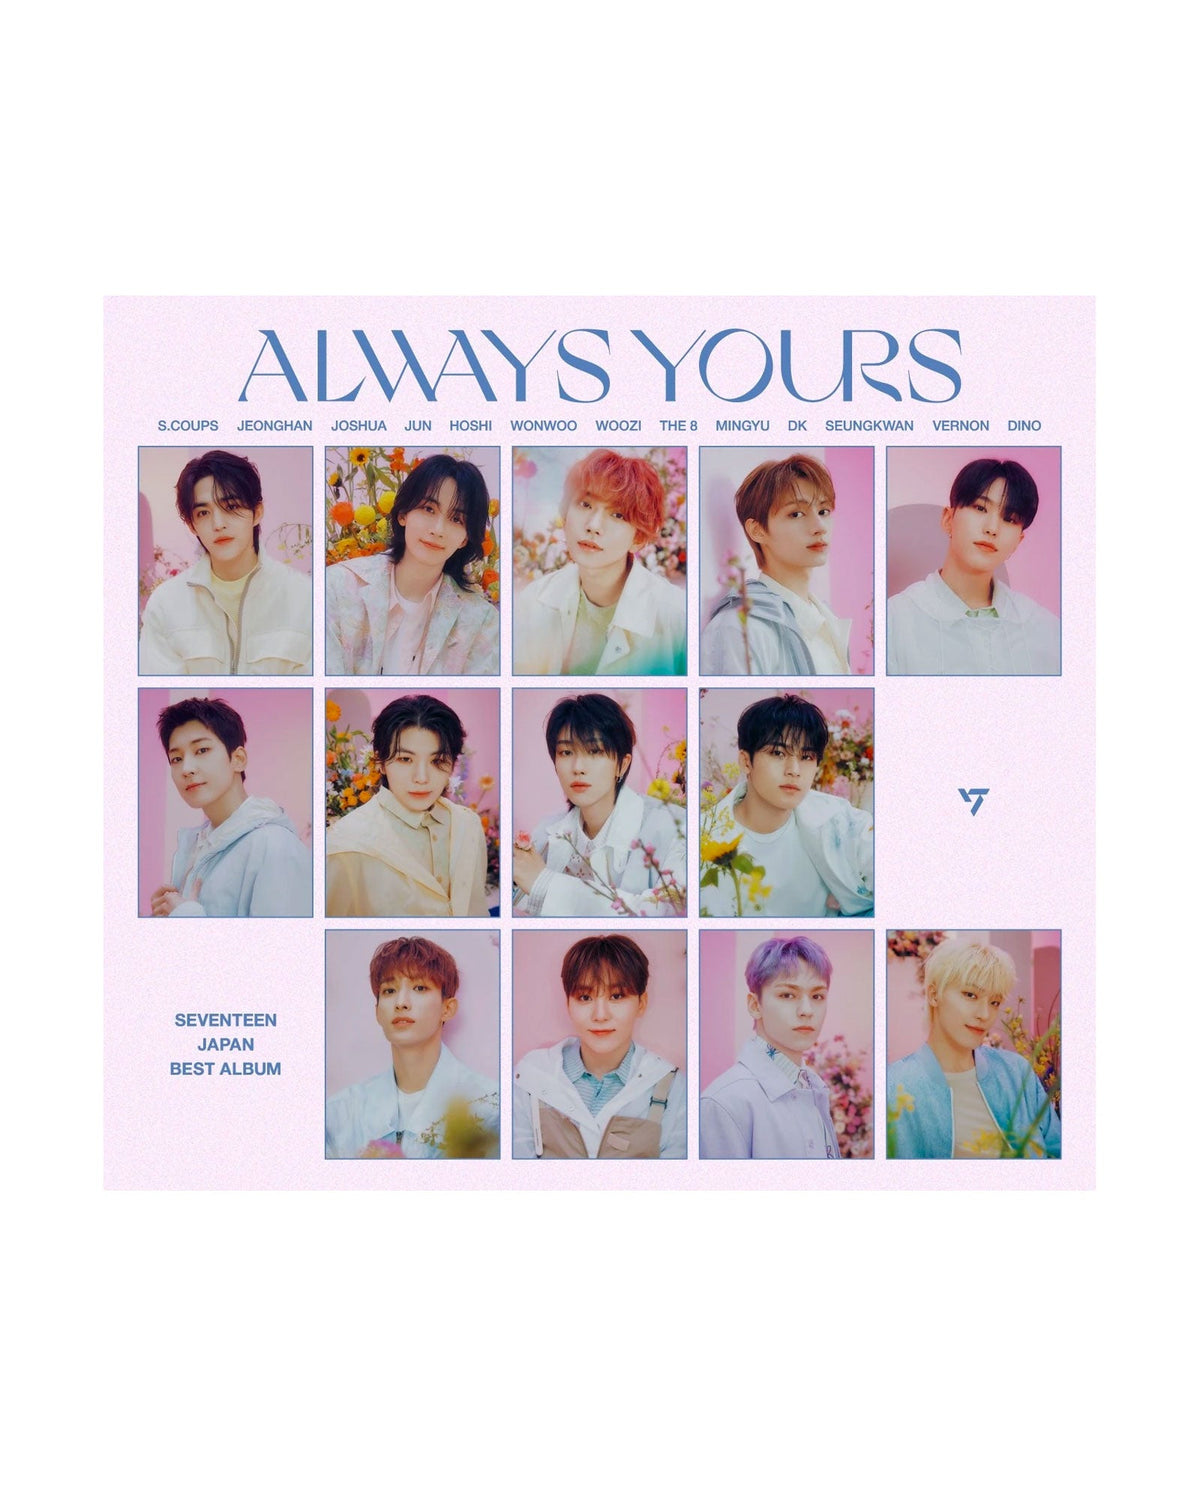 Seventeen - Seventeen Japan Best Album [Always Yours] Limited Edition A - D2fy · Rocktud - D2fy